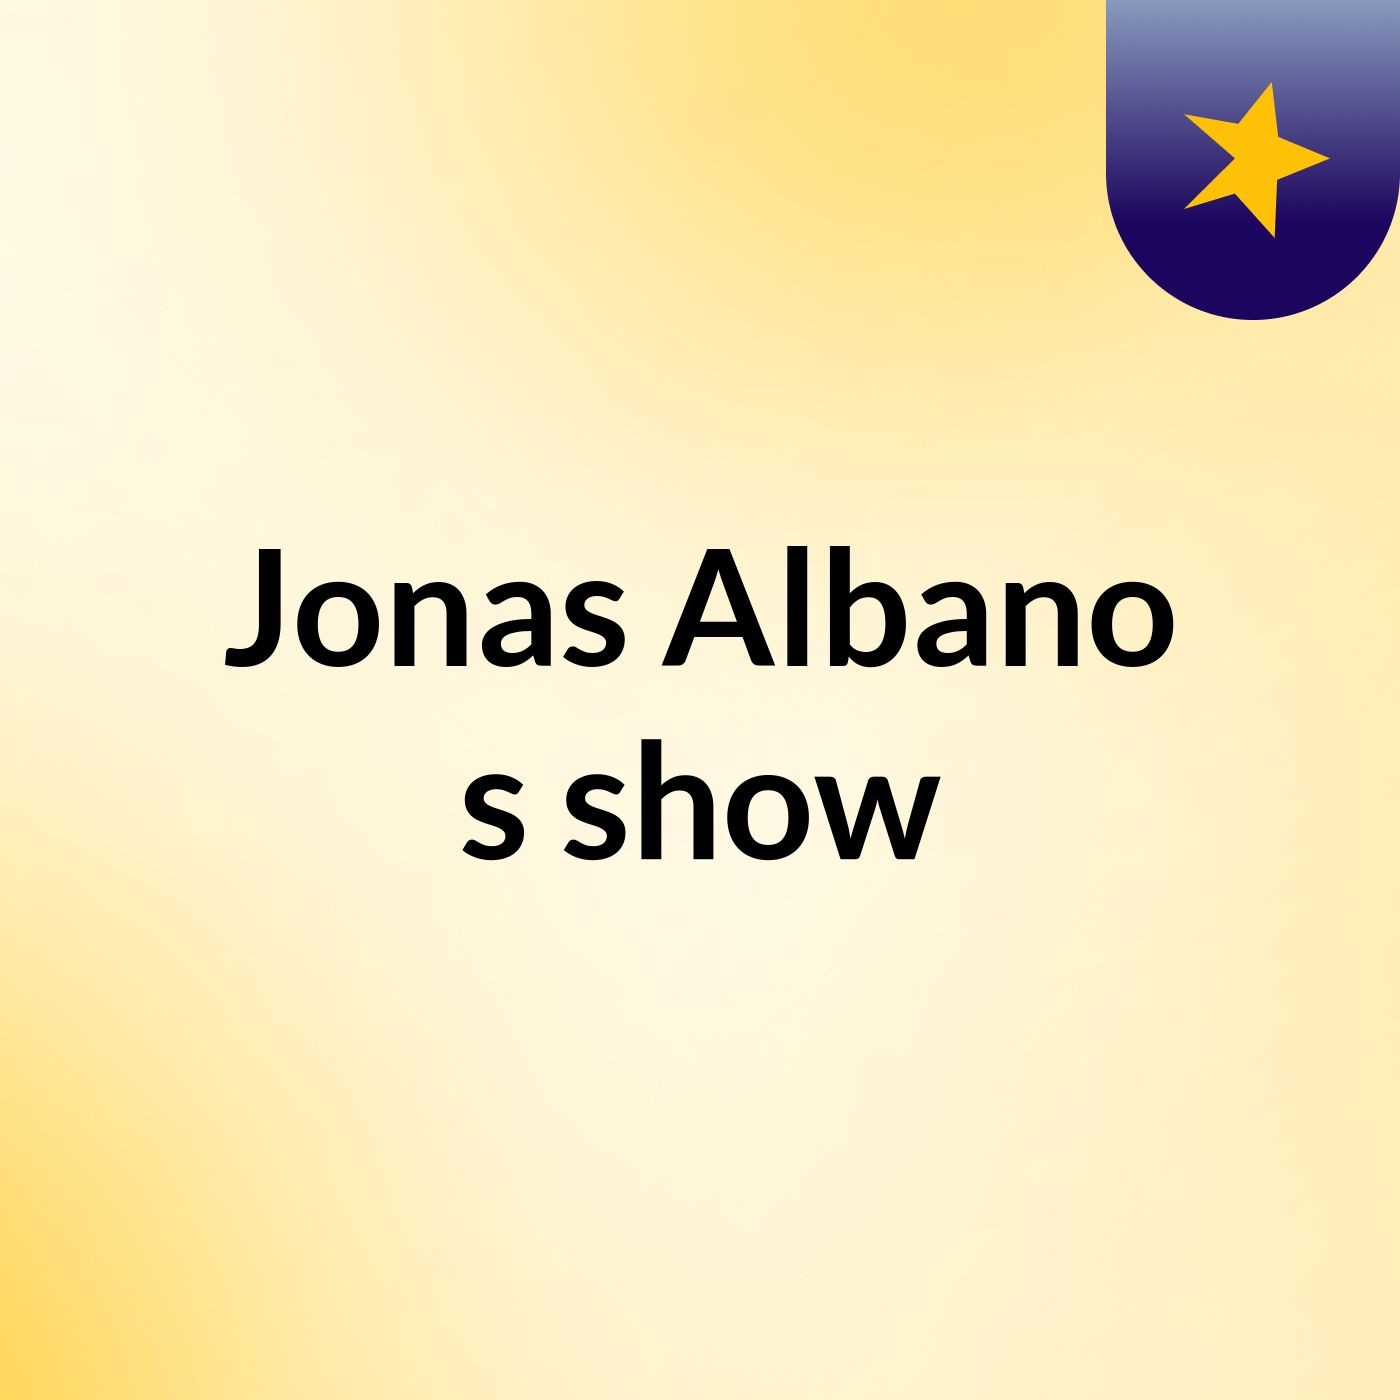 Jonas Albano's show